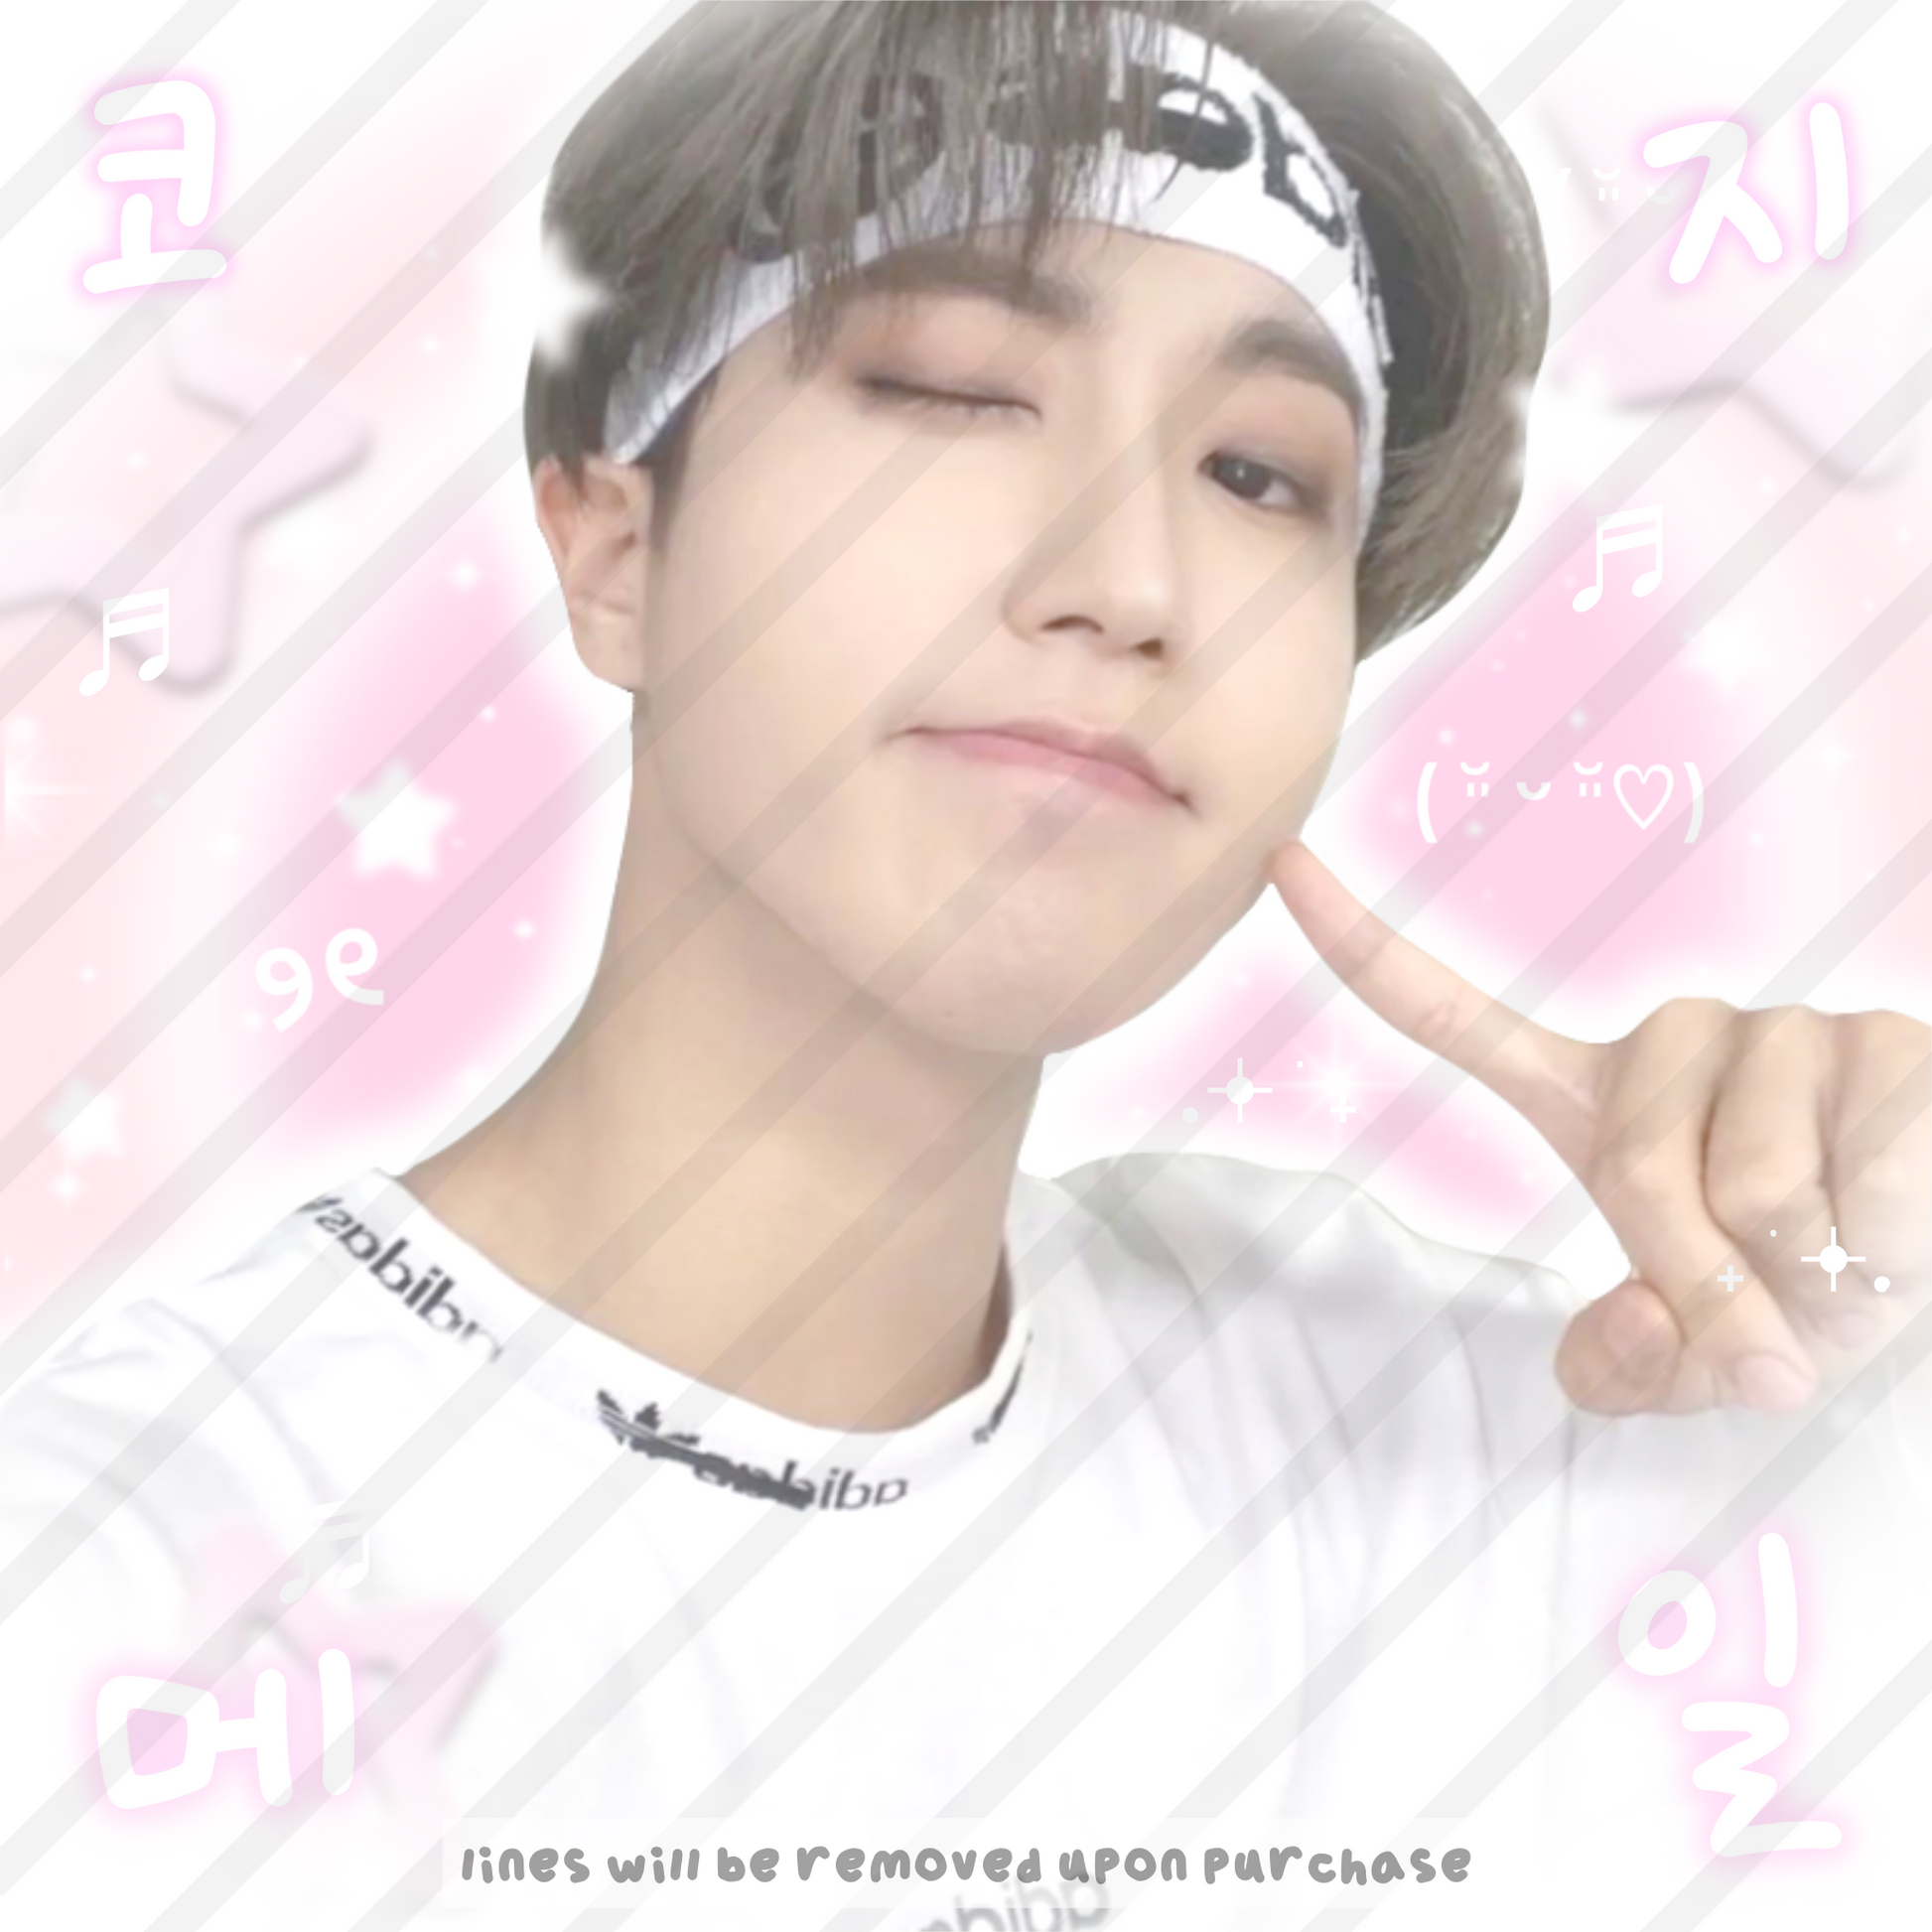 Kpop Mail Stickers – cozyloveclub